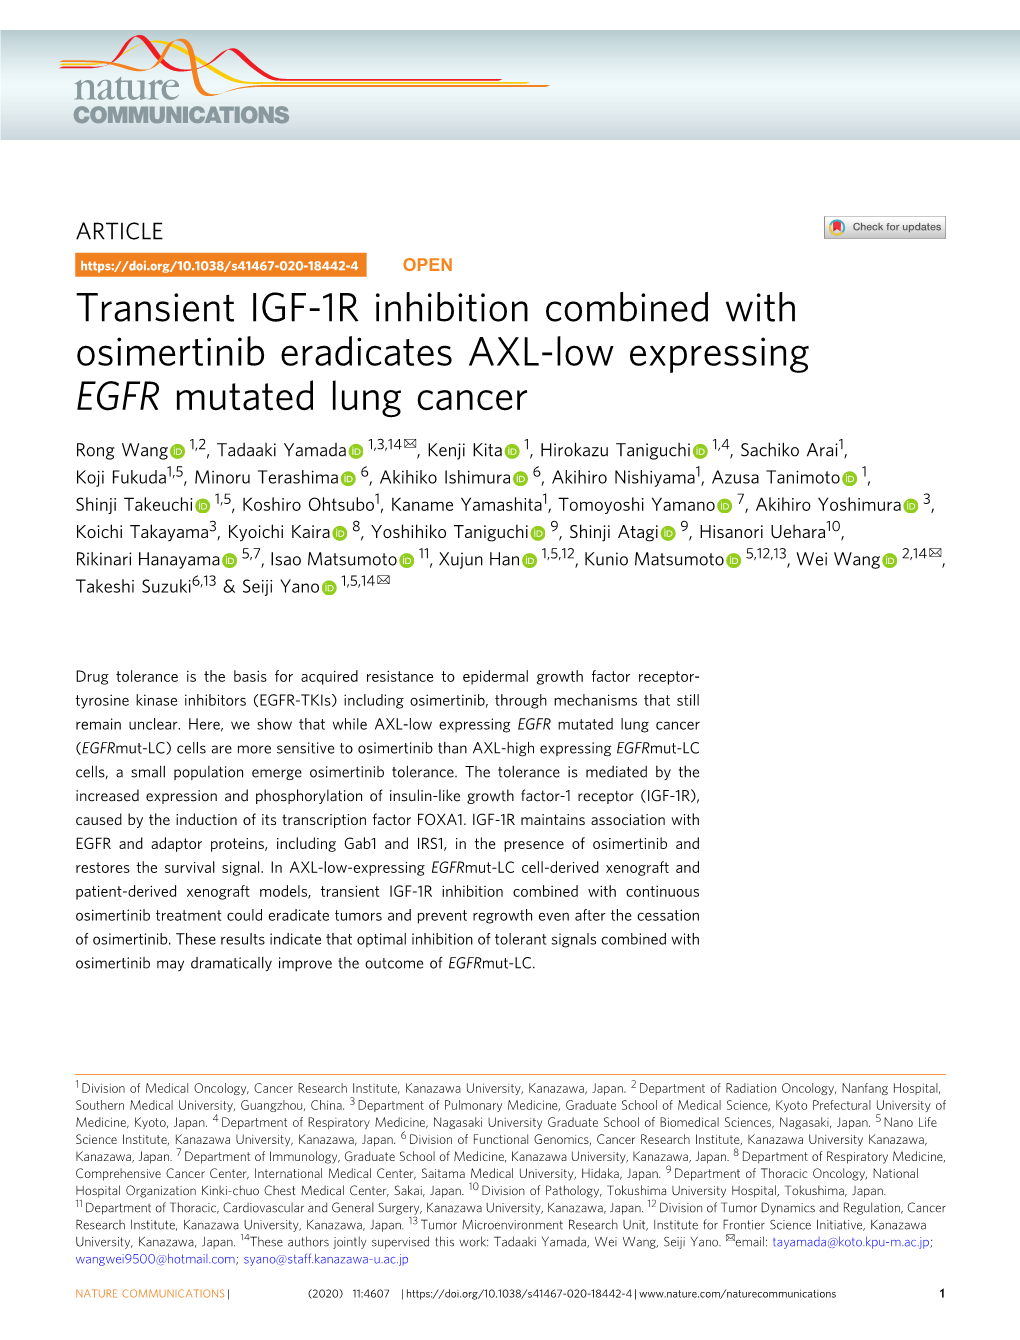 Transient IGF-1R Inhibition Combined with Osimertinib Eradicates AXL-Low